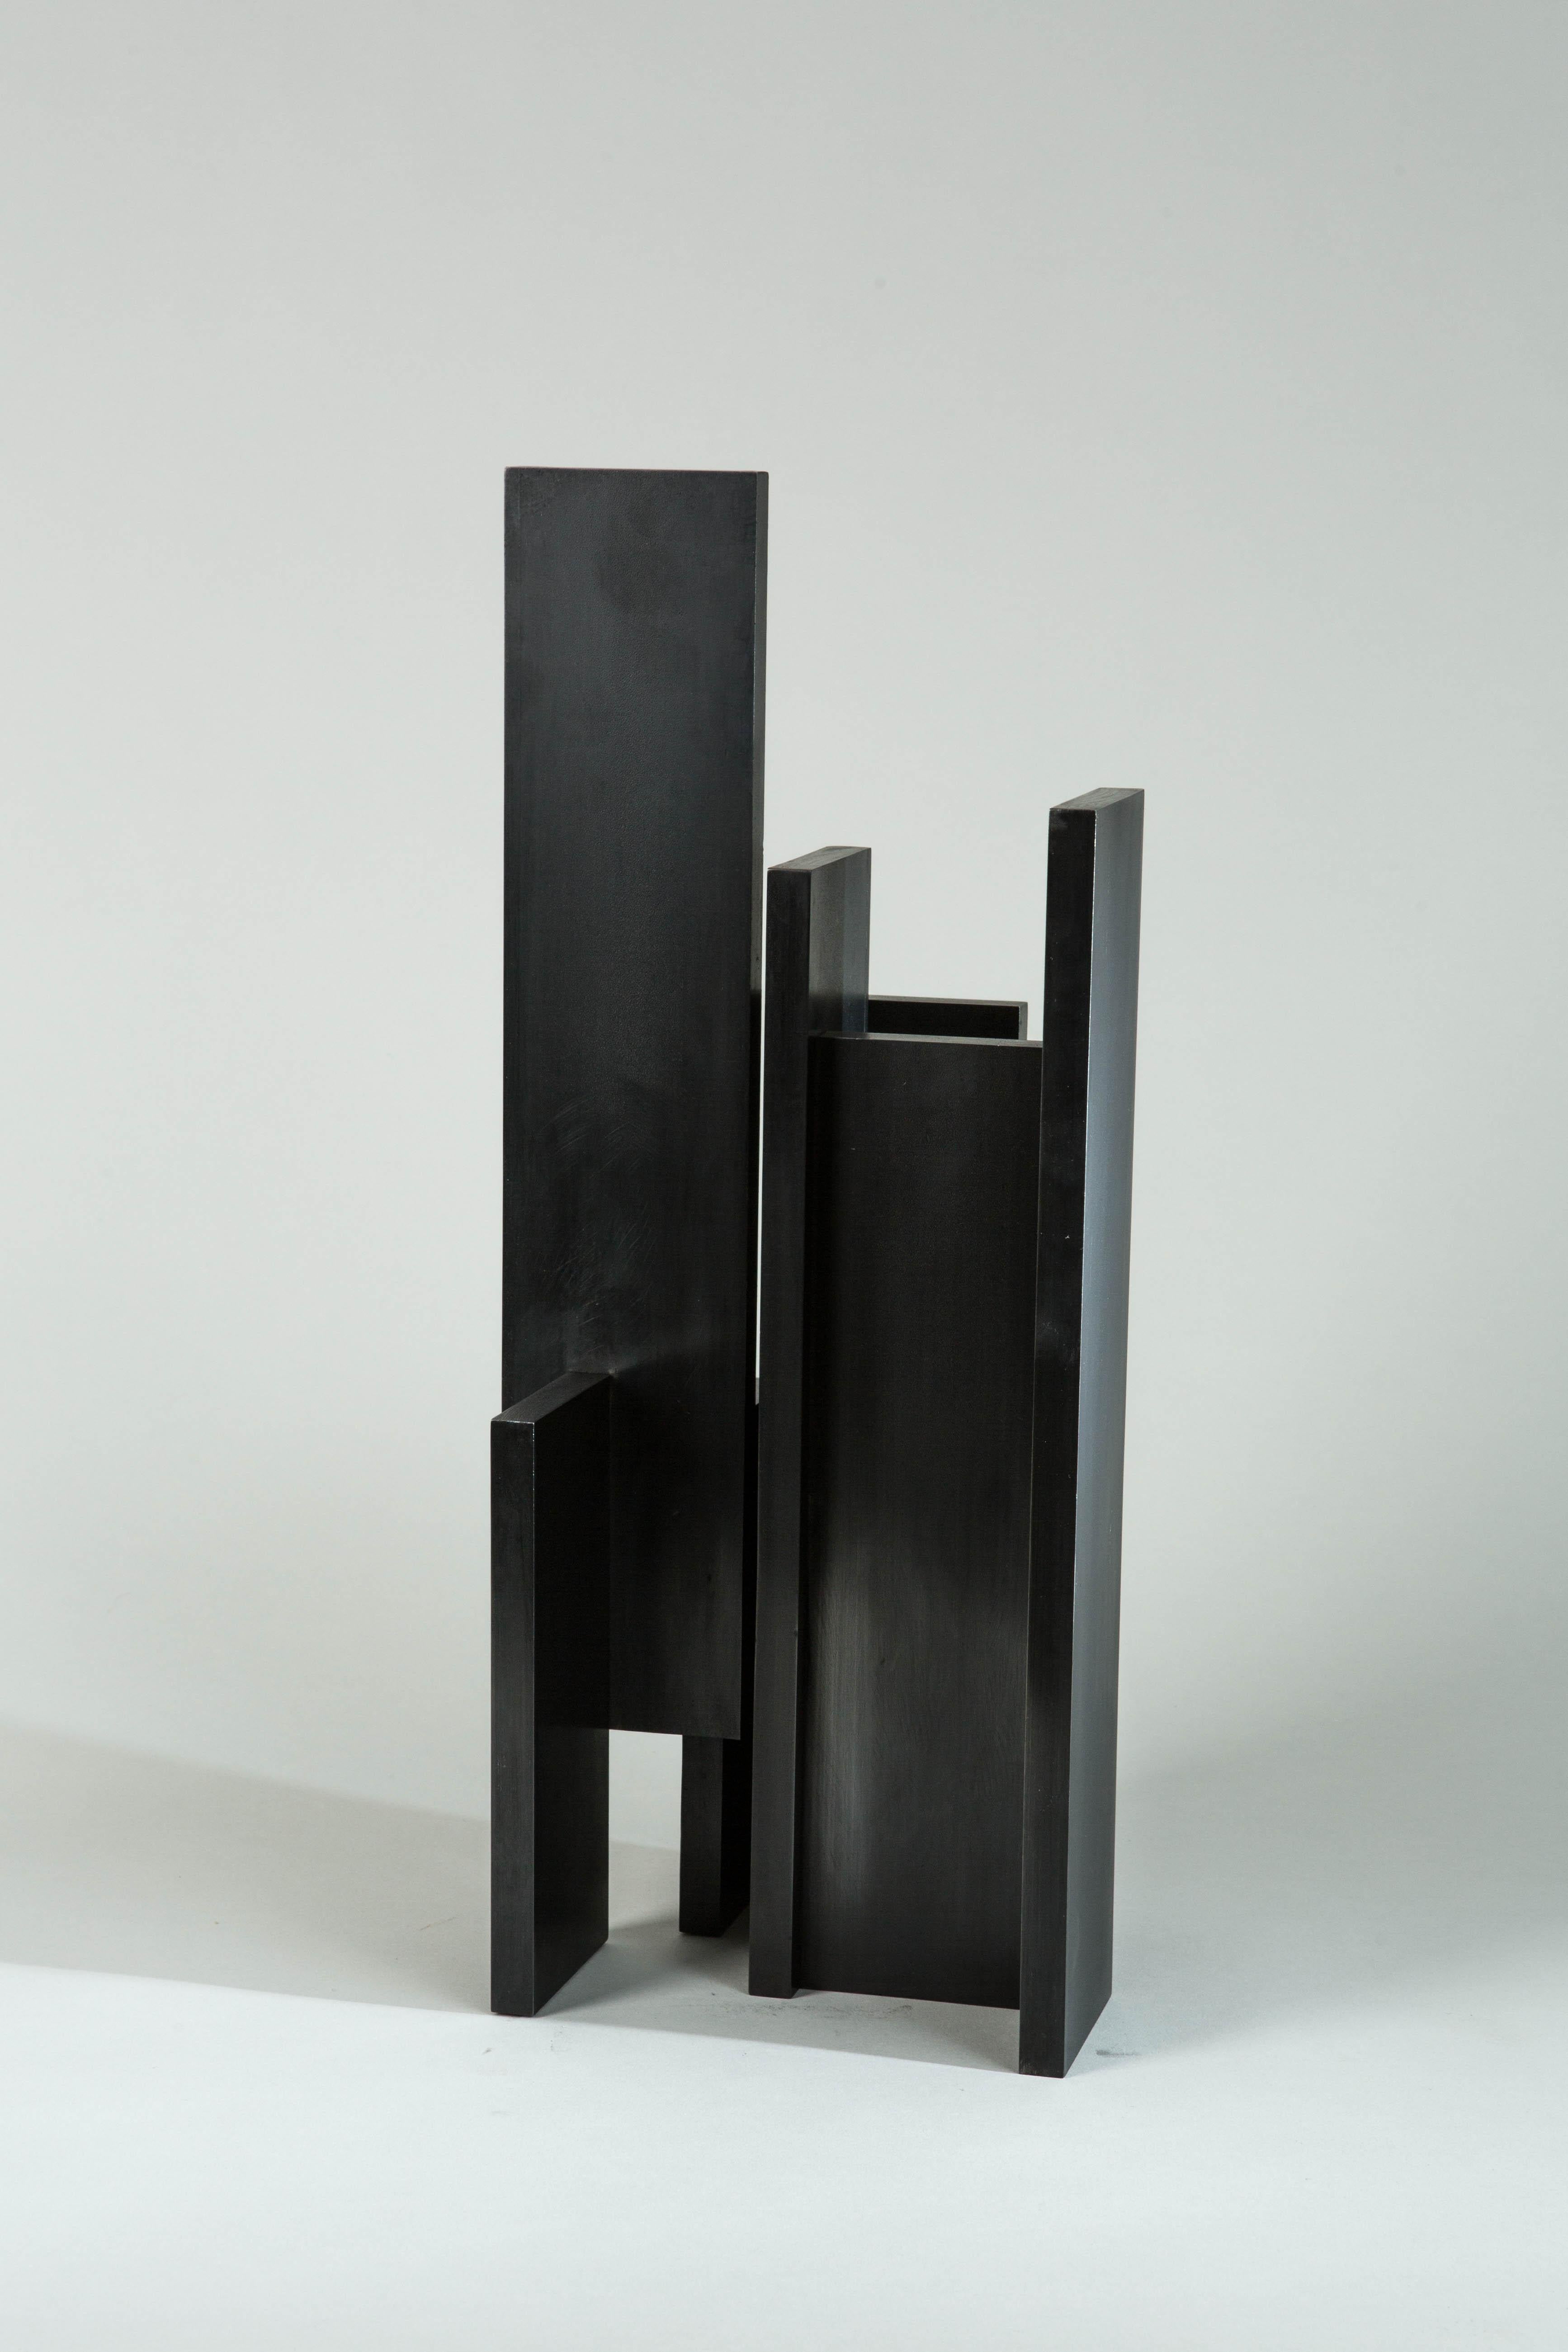 Etienne Viard Abstract Sculpture - Architecture, 2018, steel sculpture, abstract, rust, minimalism, 